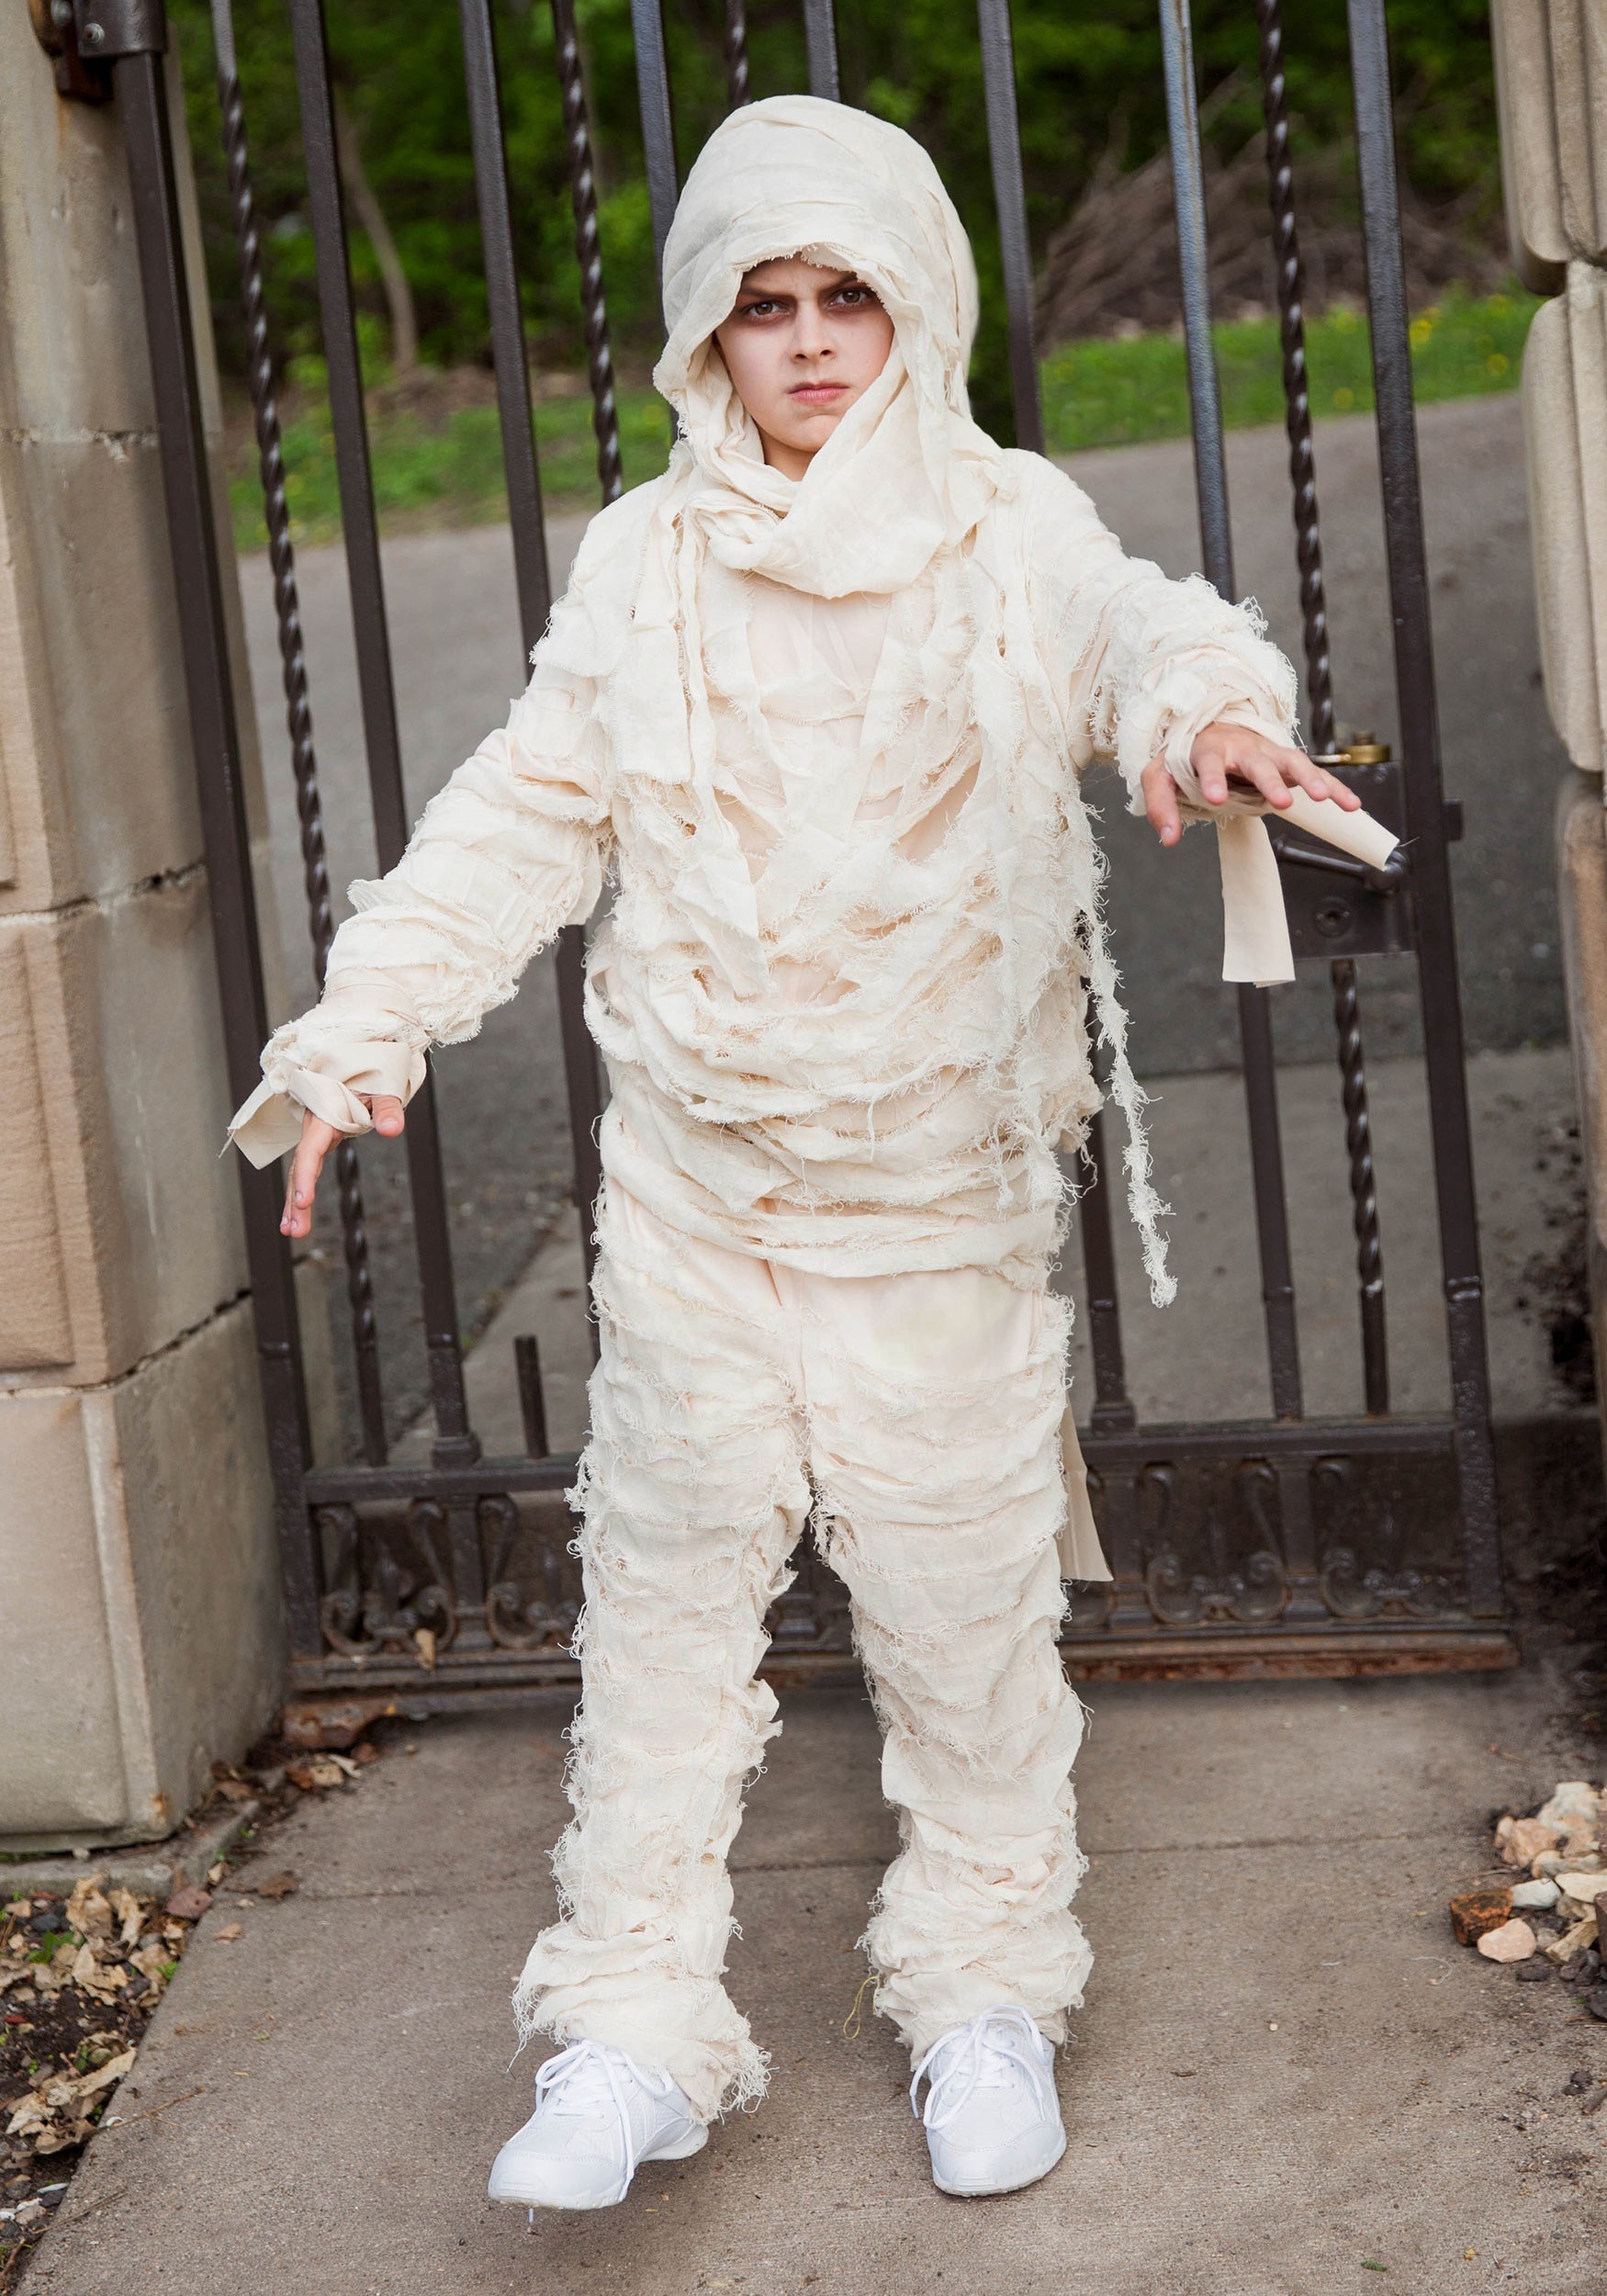 12++ Mummy halloween costume diy information